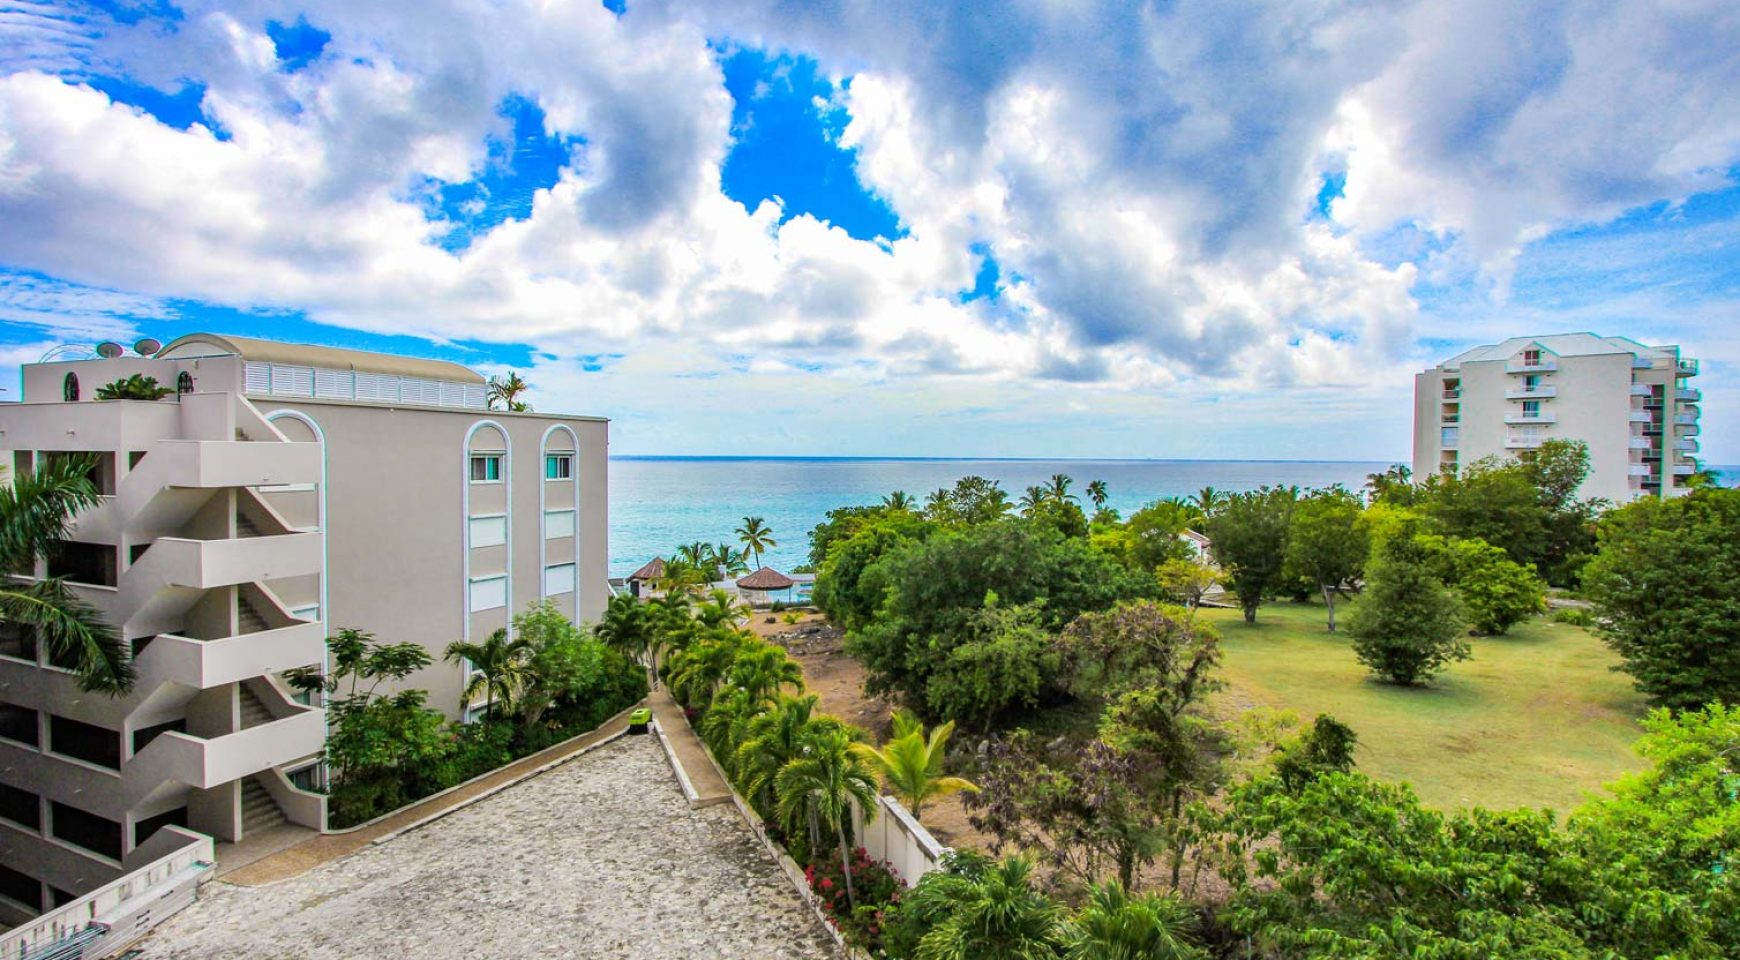 Rainbow Beach Club Condos For Rent - Century21 St Maarten Real Estate